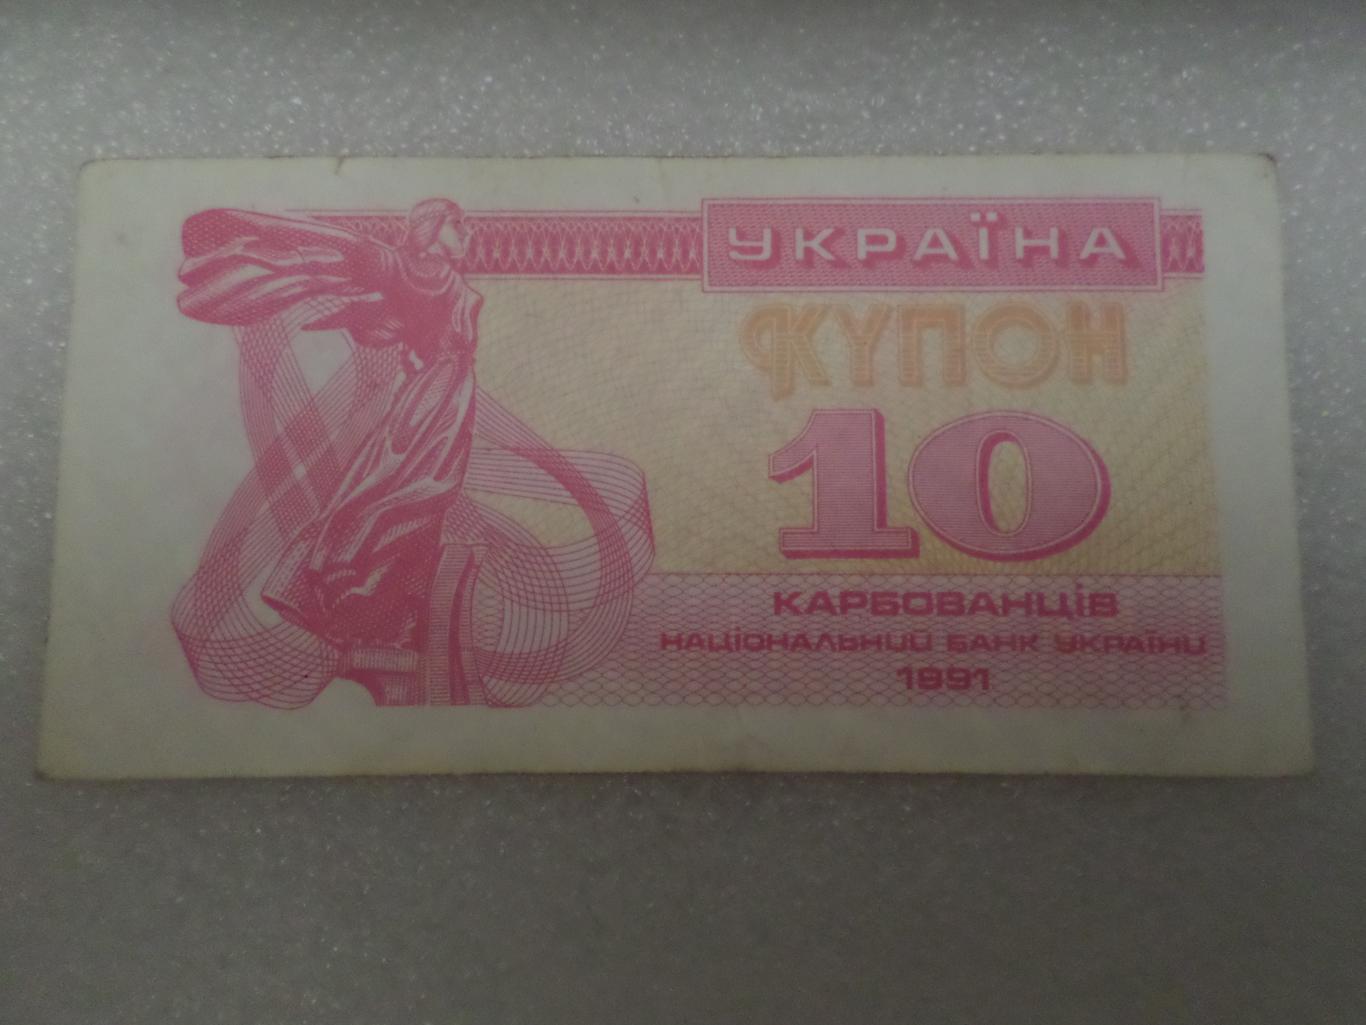 Банкнота 10 купонов карбованцев Украина 1991 г